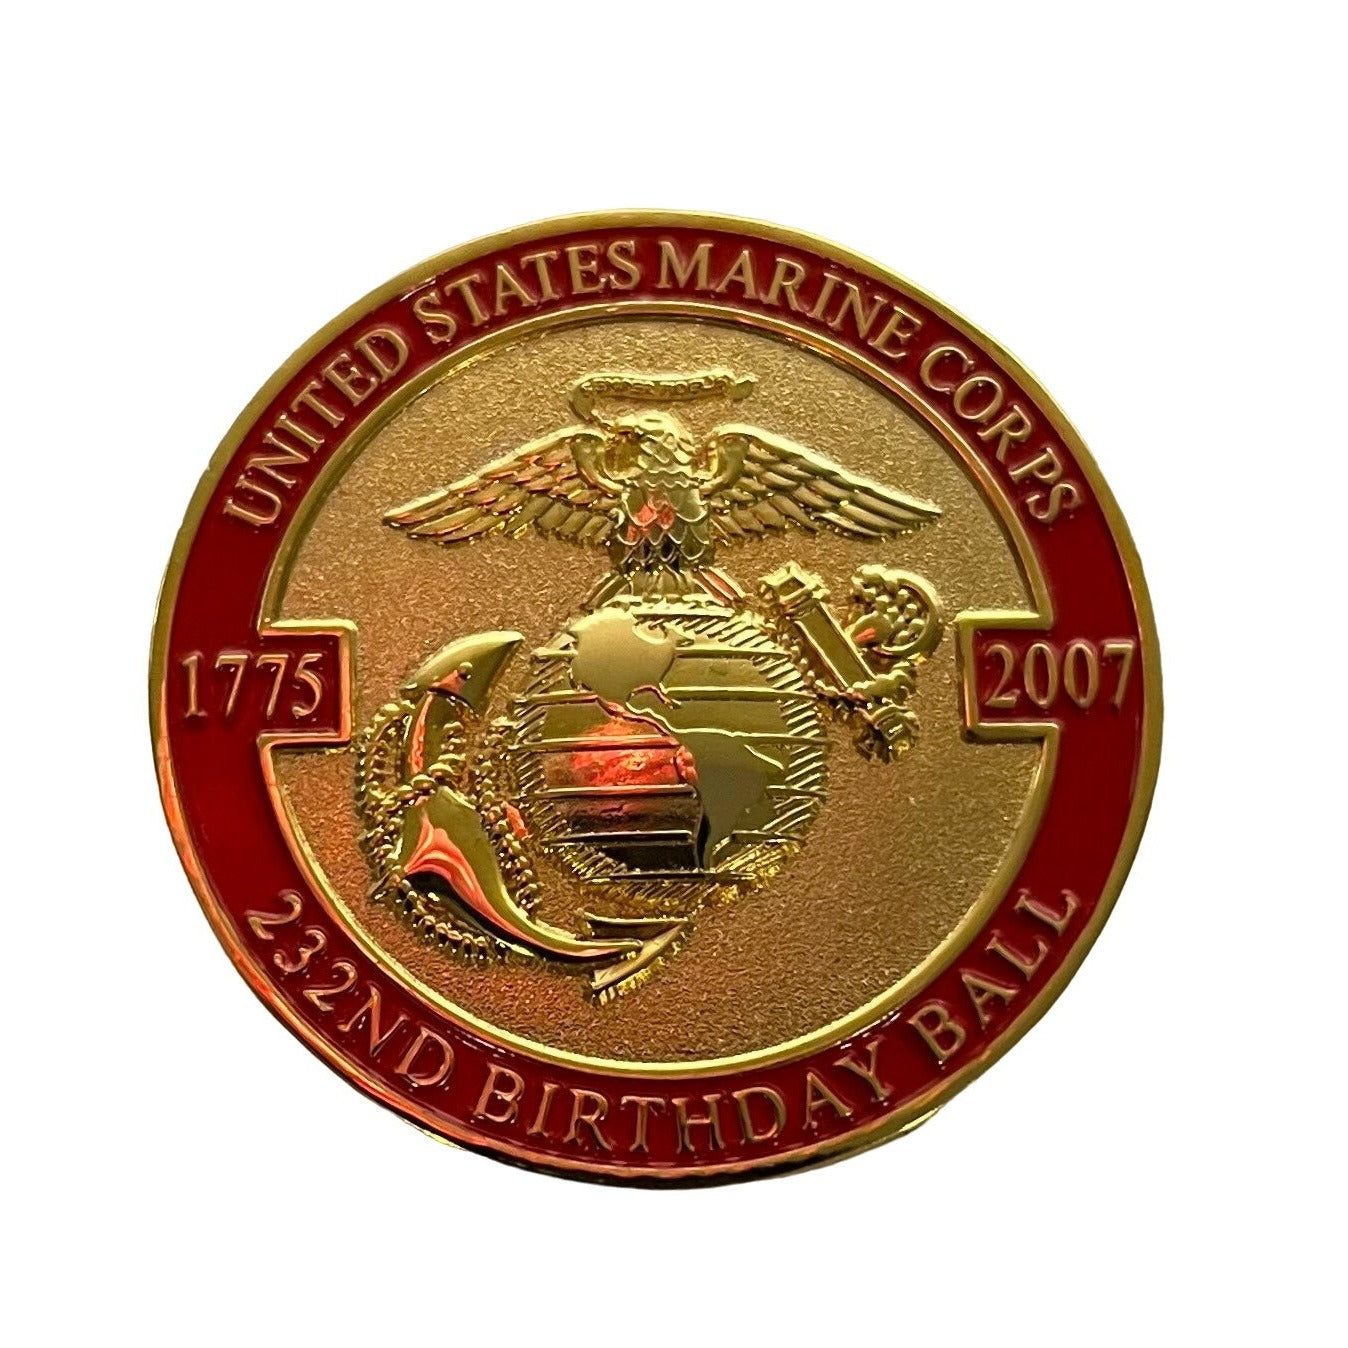 Lot of 4 US Marine Corps 4th Maintenance Battalion - Marine Corps Ball Challenge Coins